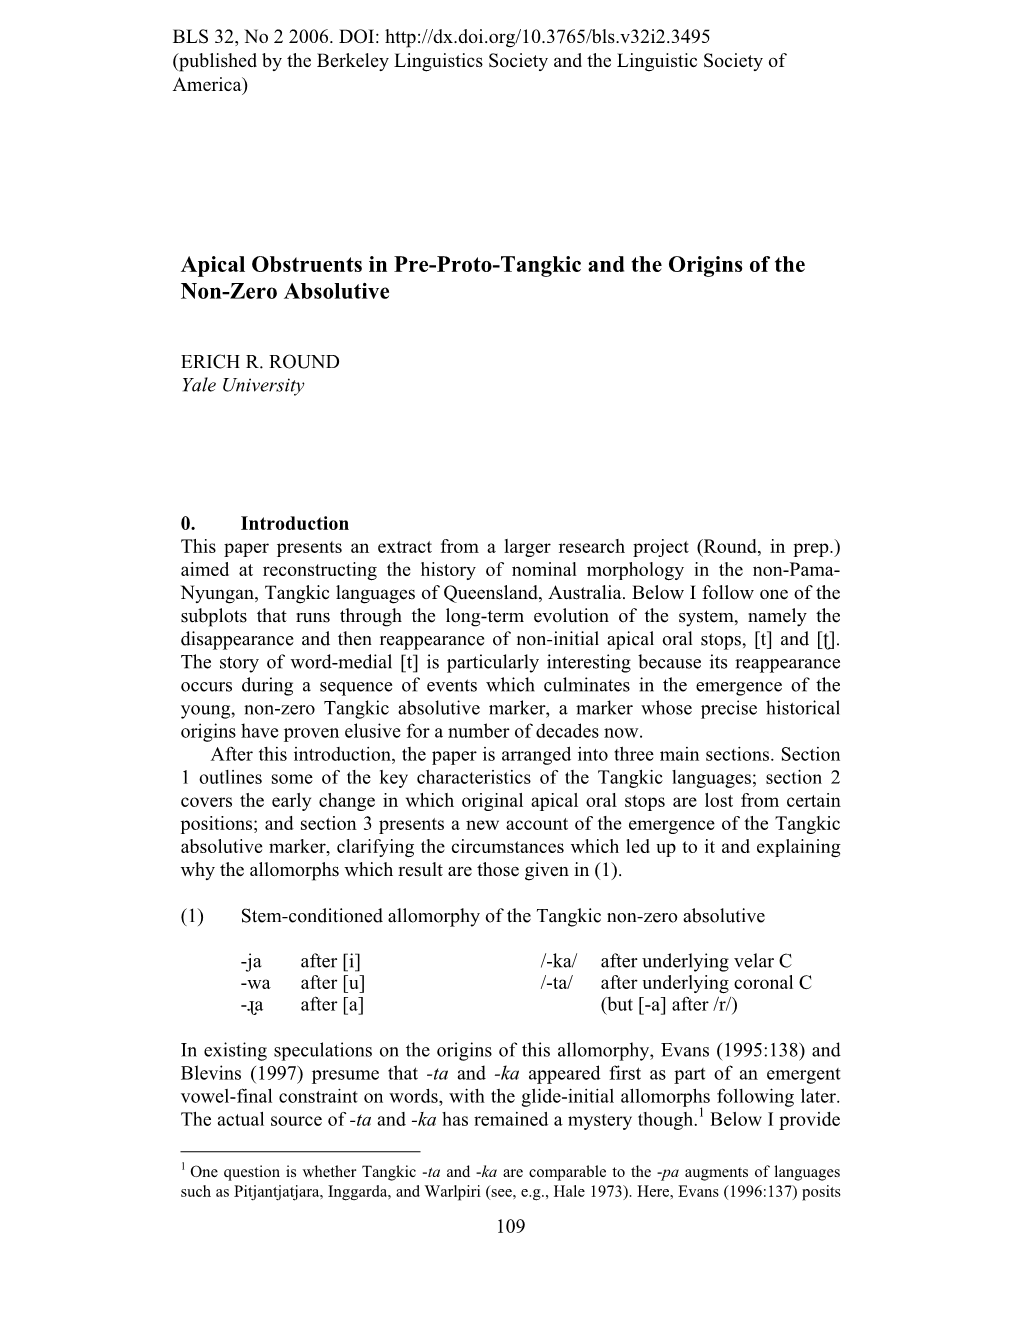 Apical Obstruents in Pre-Proto-Tangkic and the Origins of the Non-Zero Absolutive